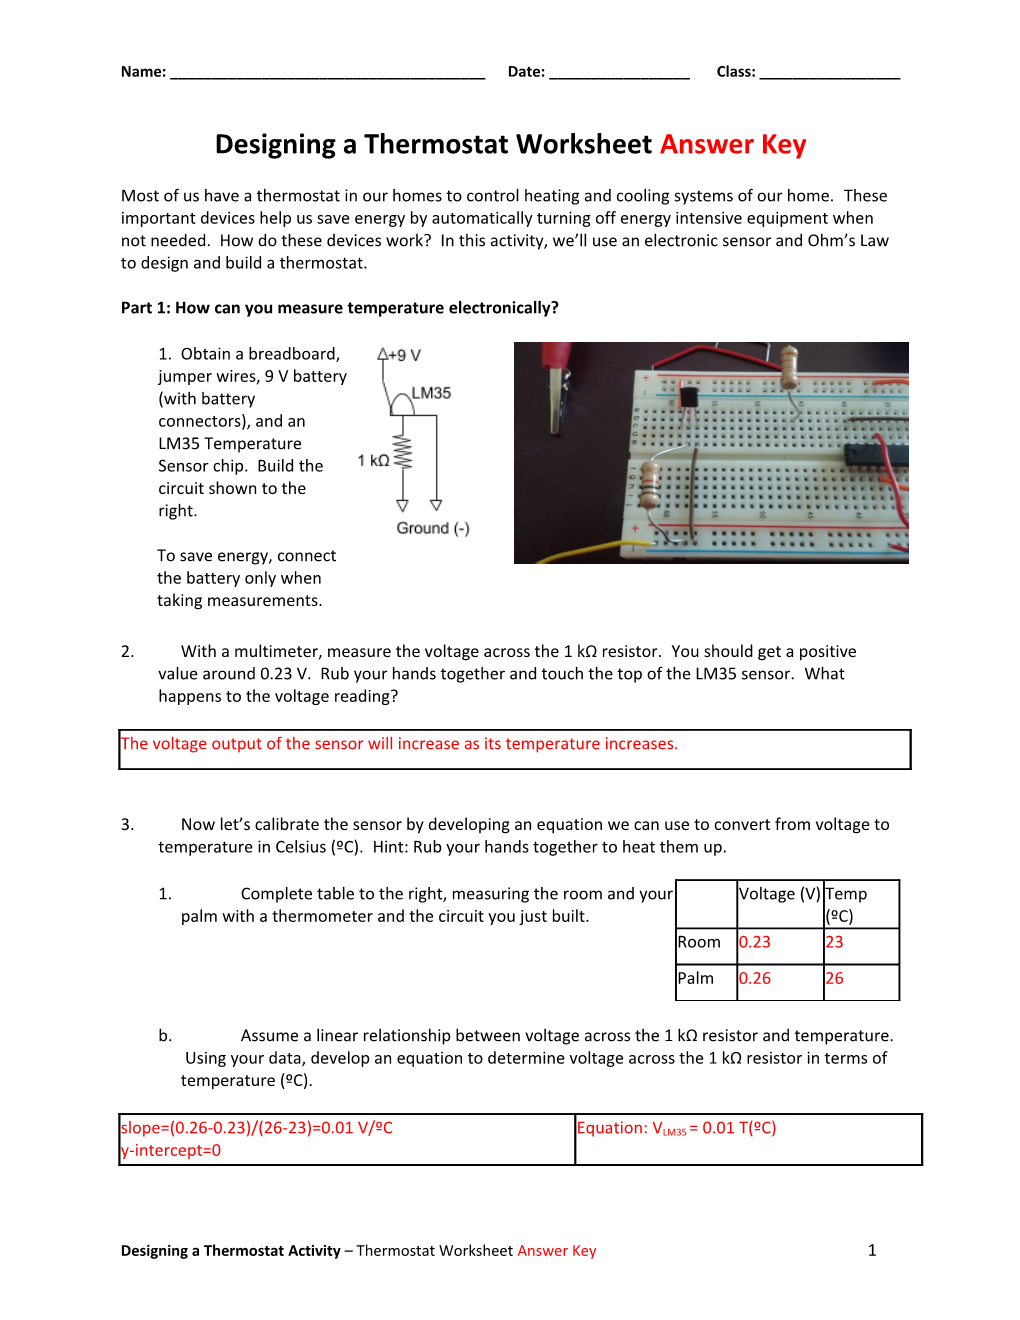 Designing a Thermostat Worksheetanswer Key